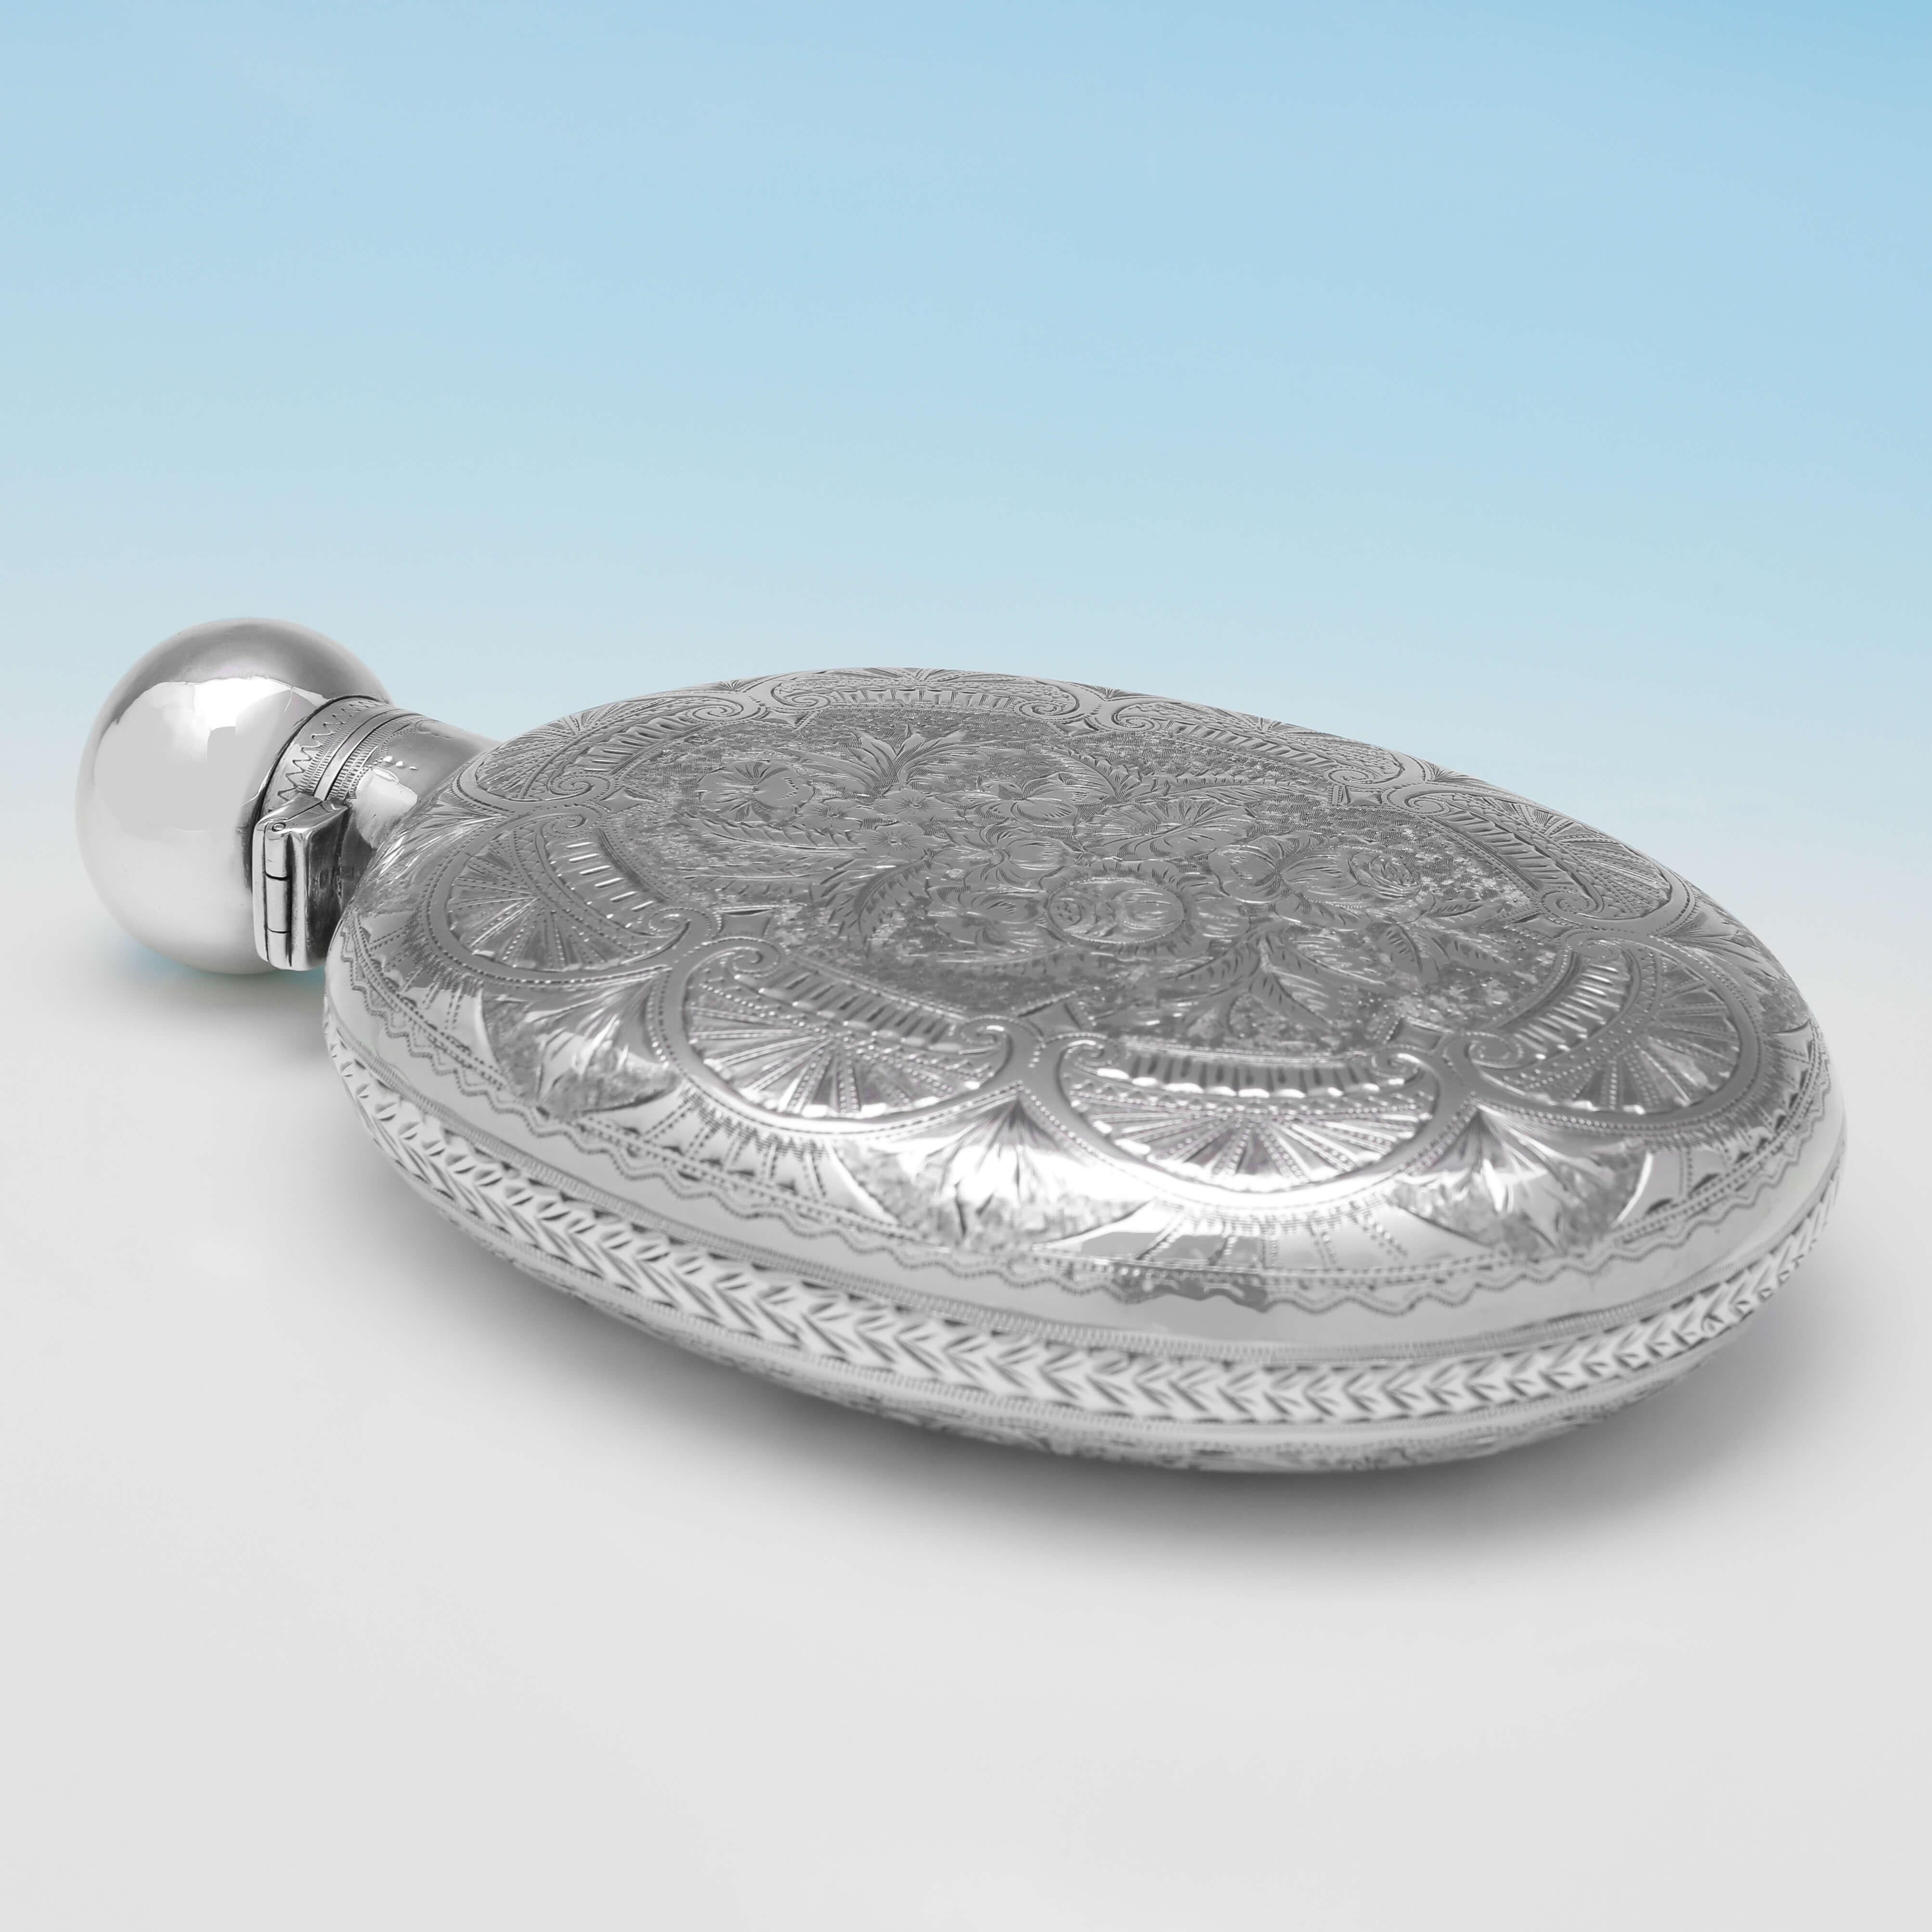 Edwardian Stunning Engraved Antique Sterling Silver Hip Flask, Joseph Gloster, 1909